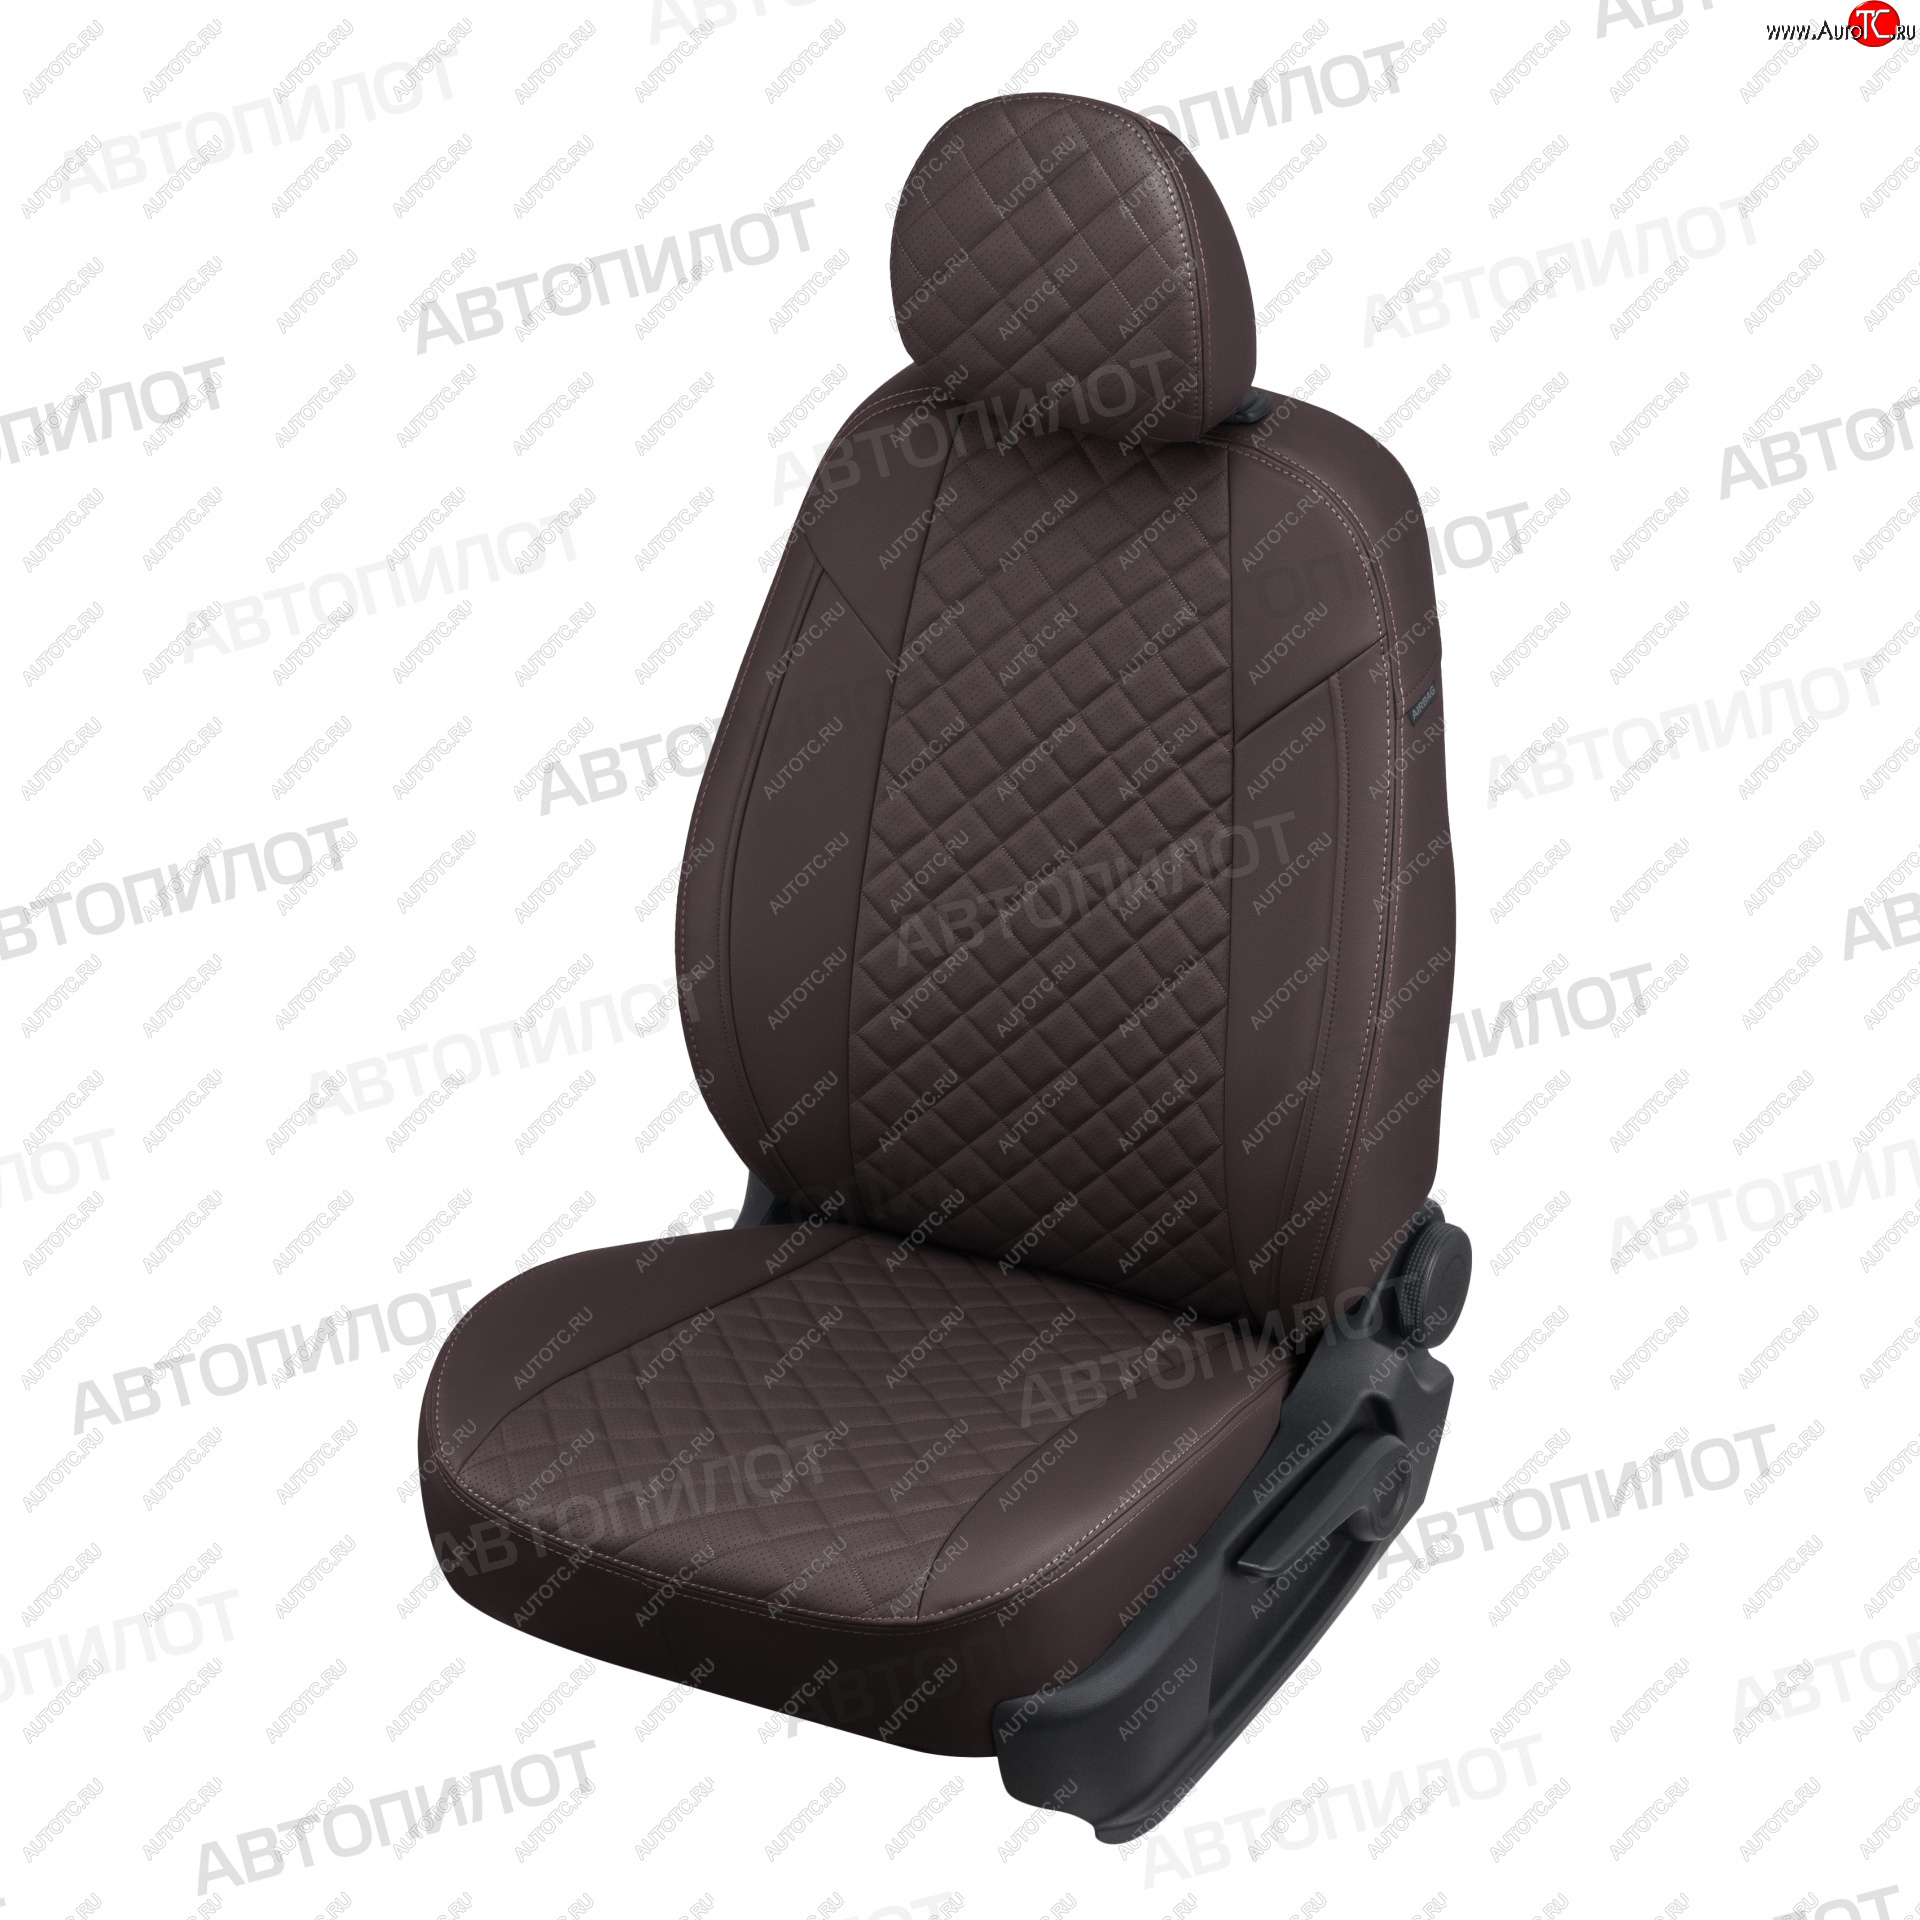 13 999 р. Чехлы сидений (экокожа) Автопилот Ромб  Chevrolet Trailblazer  GM800 (2012-2016) (шоколад)